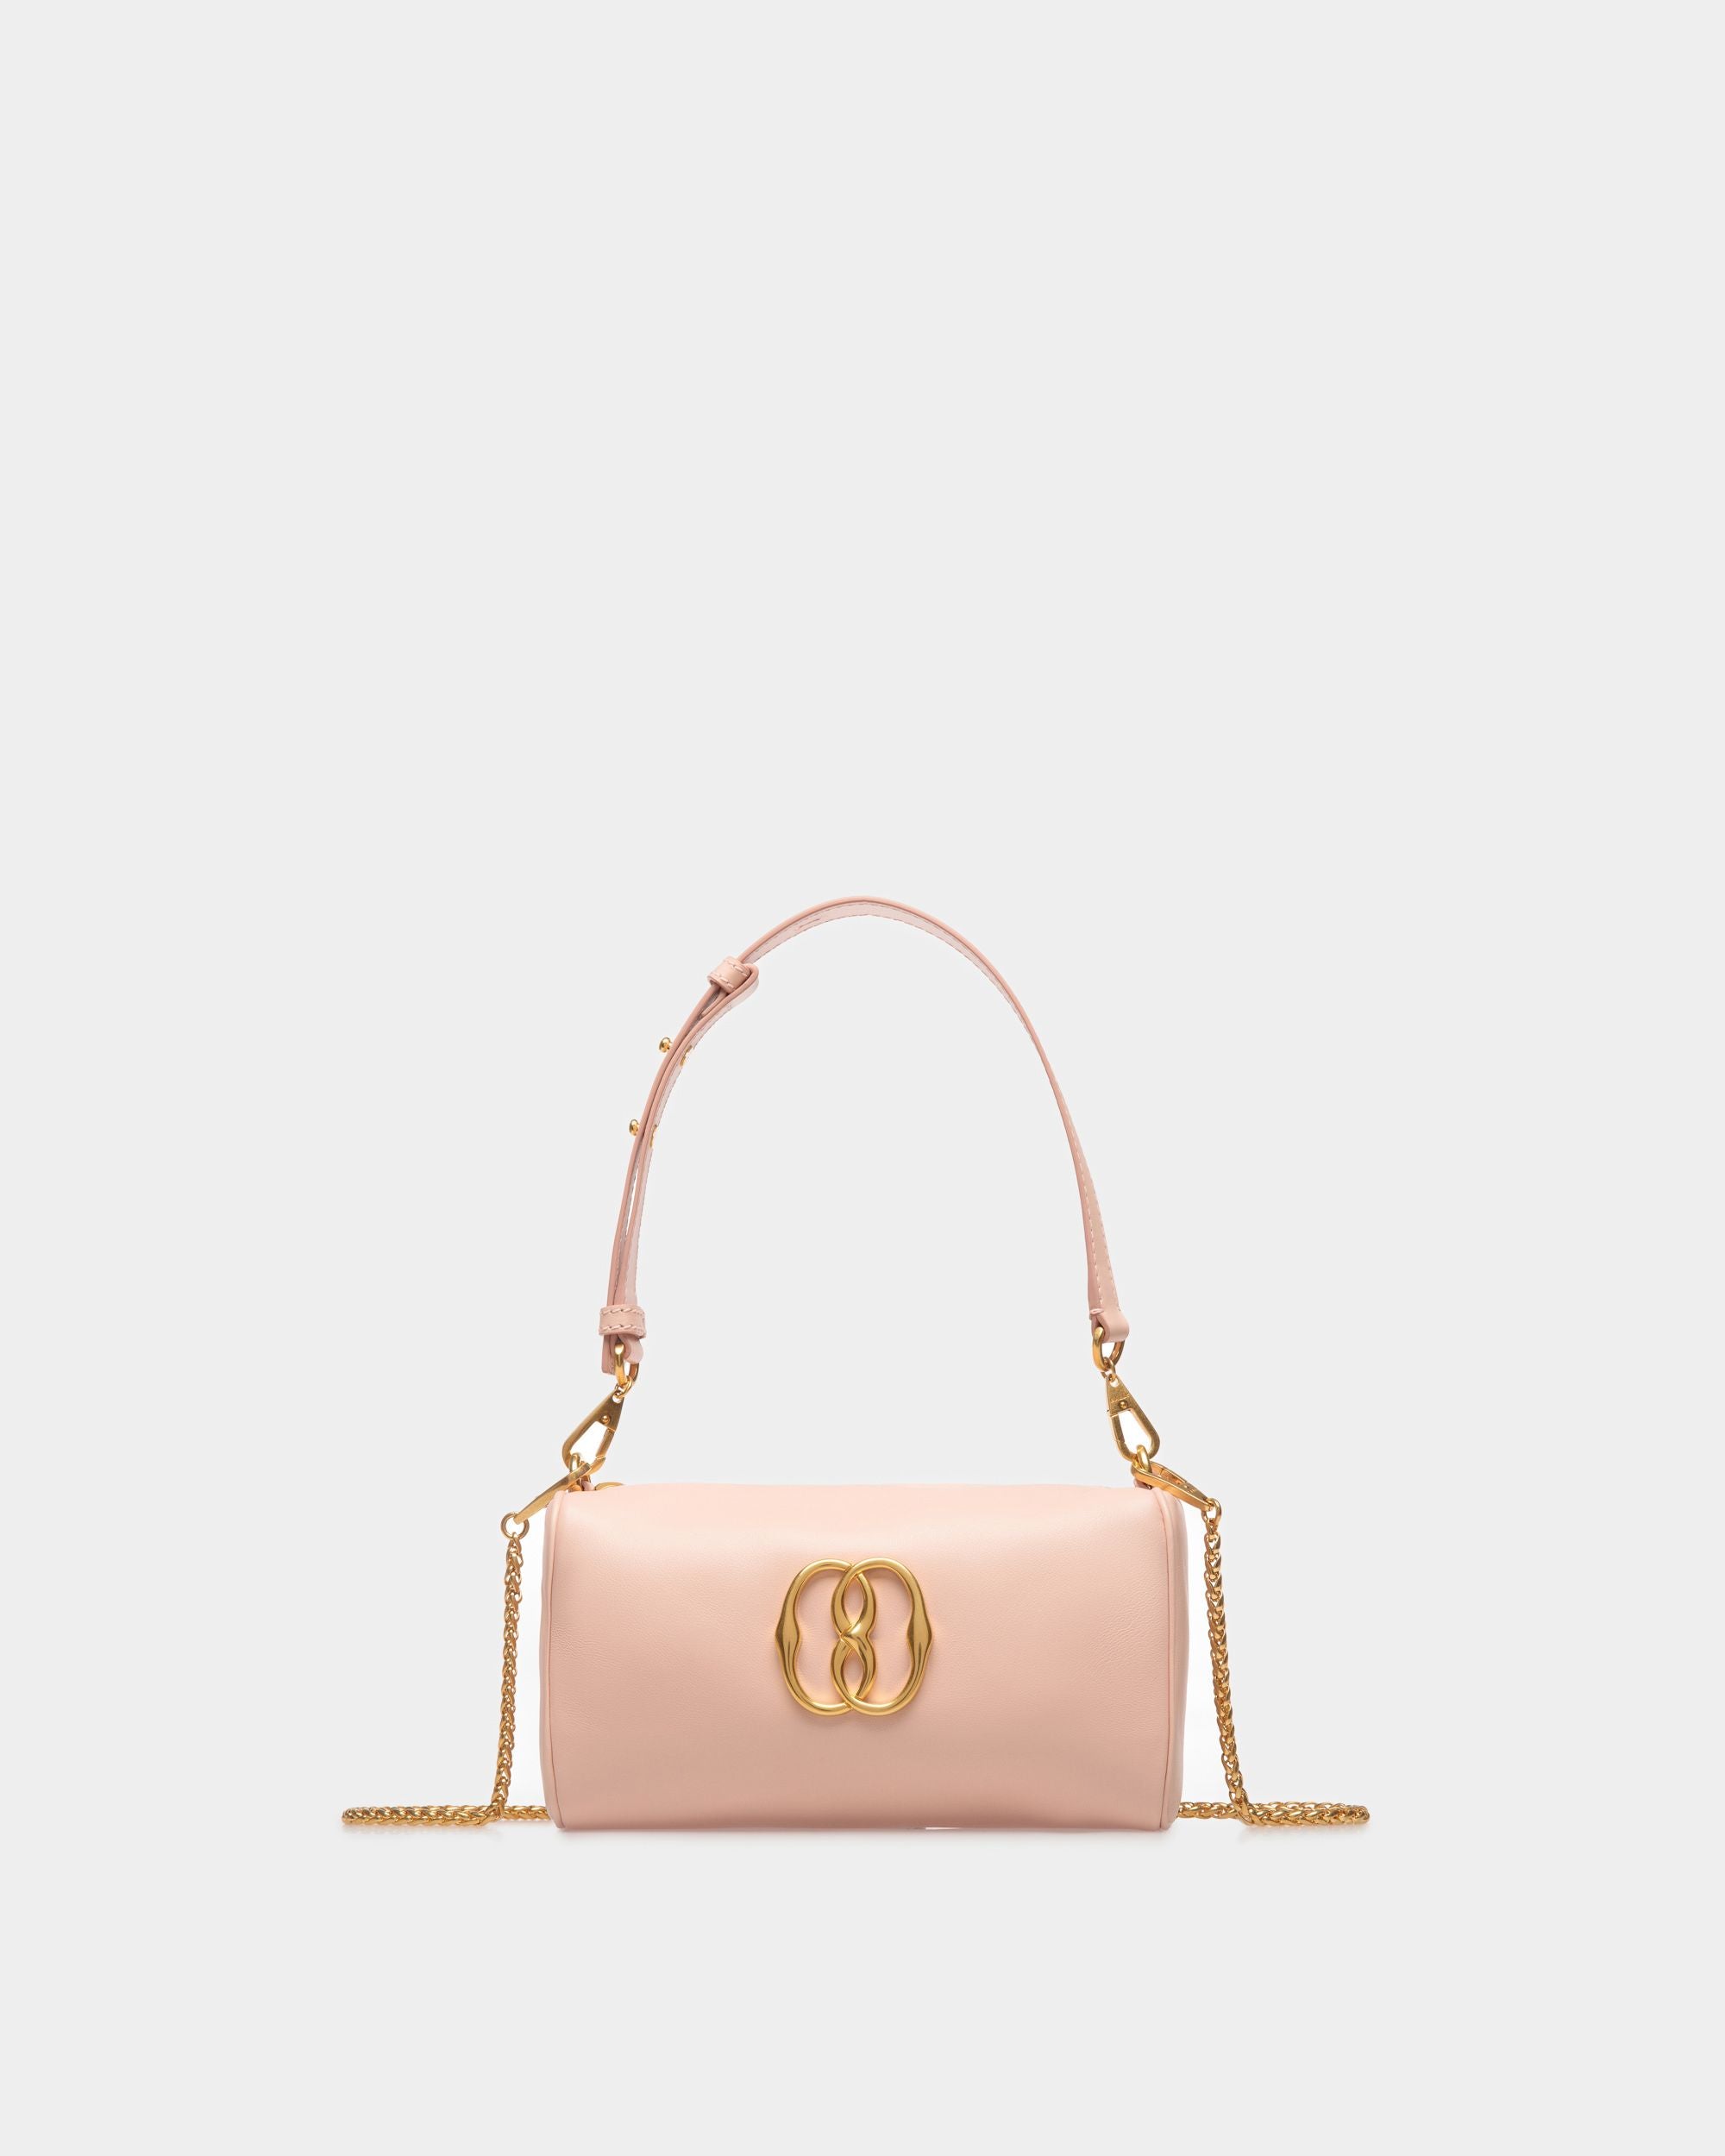 Emblem Mini bag | Women's Bags | Pink Leather | Bally | Still Life Front